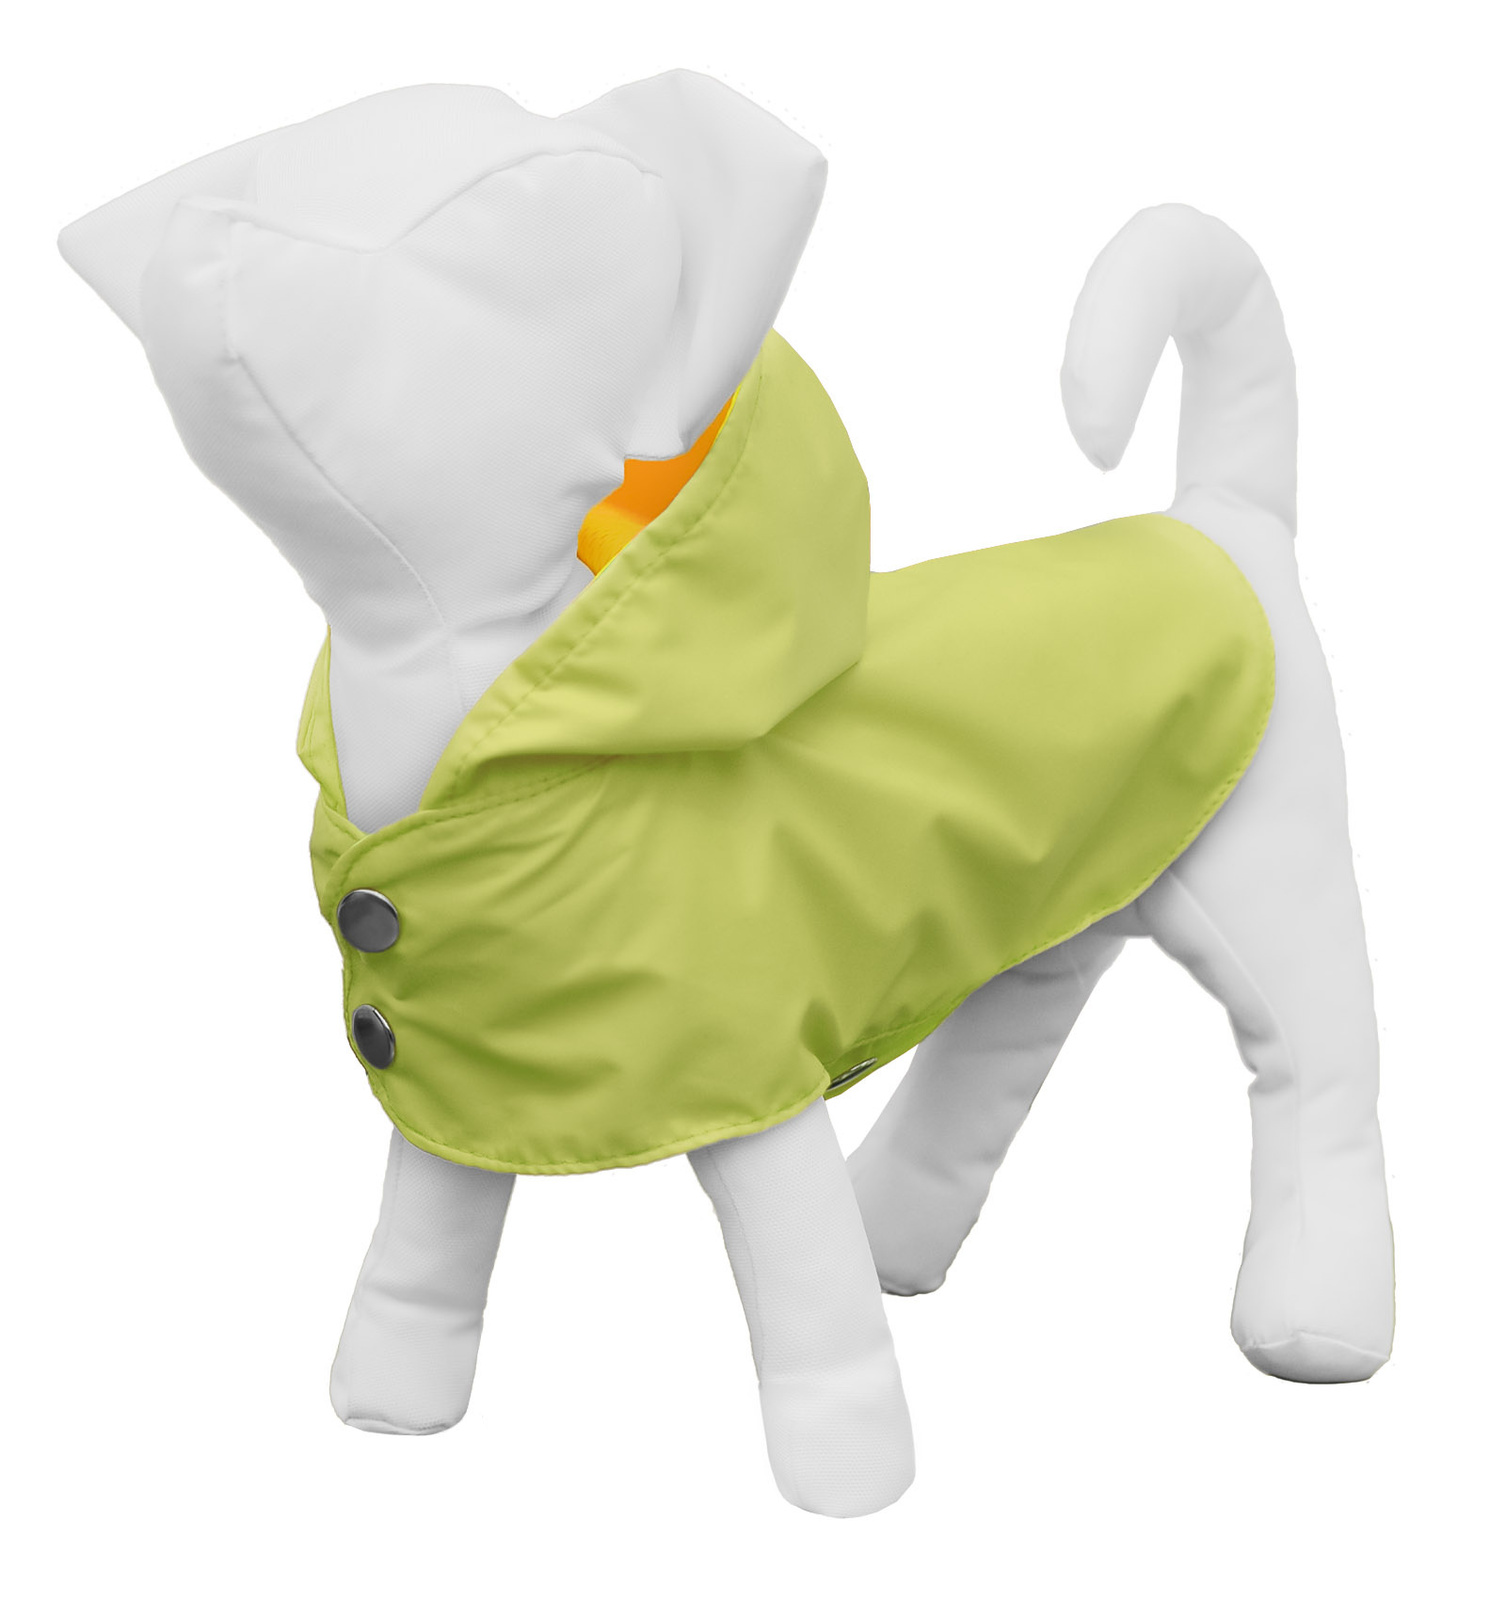 Yami-Yami одежда дождевик-плащ для собак, салатовый (L) Yami-Yami одежда дождевик-плащ для собак, салатовый (L) - фото 1